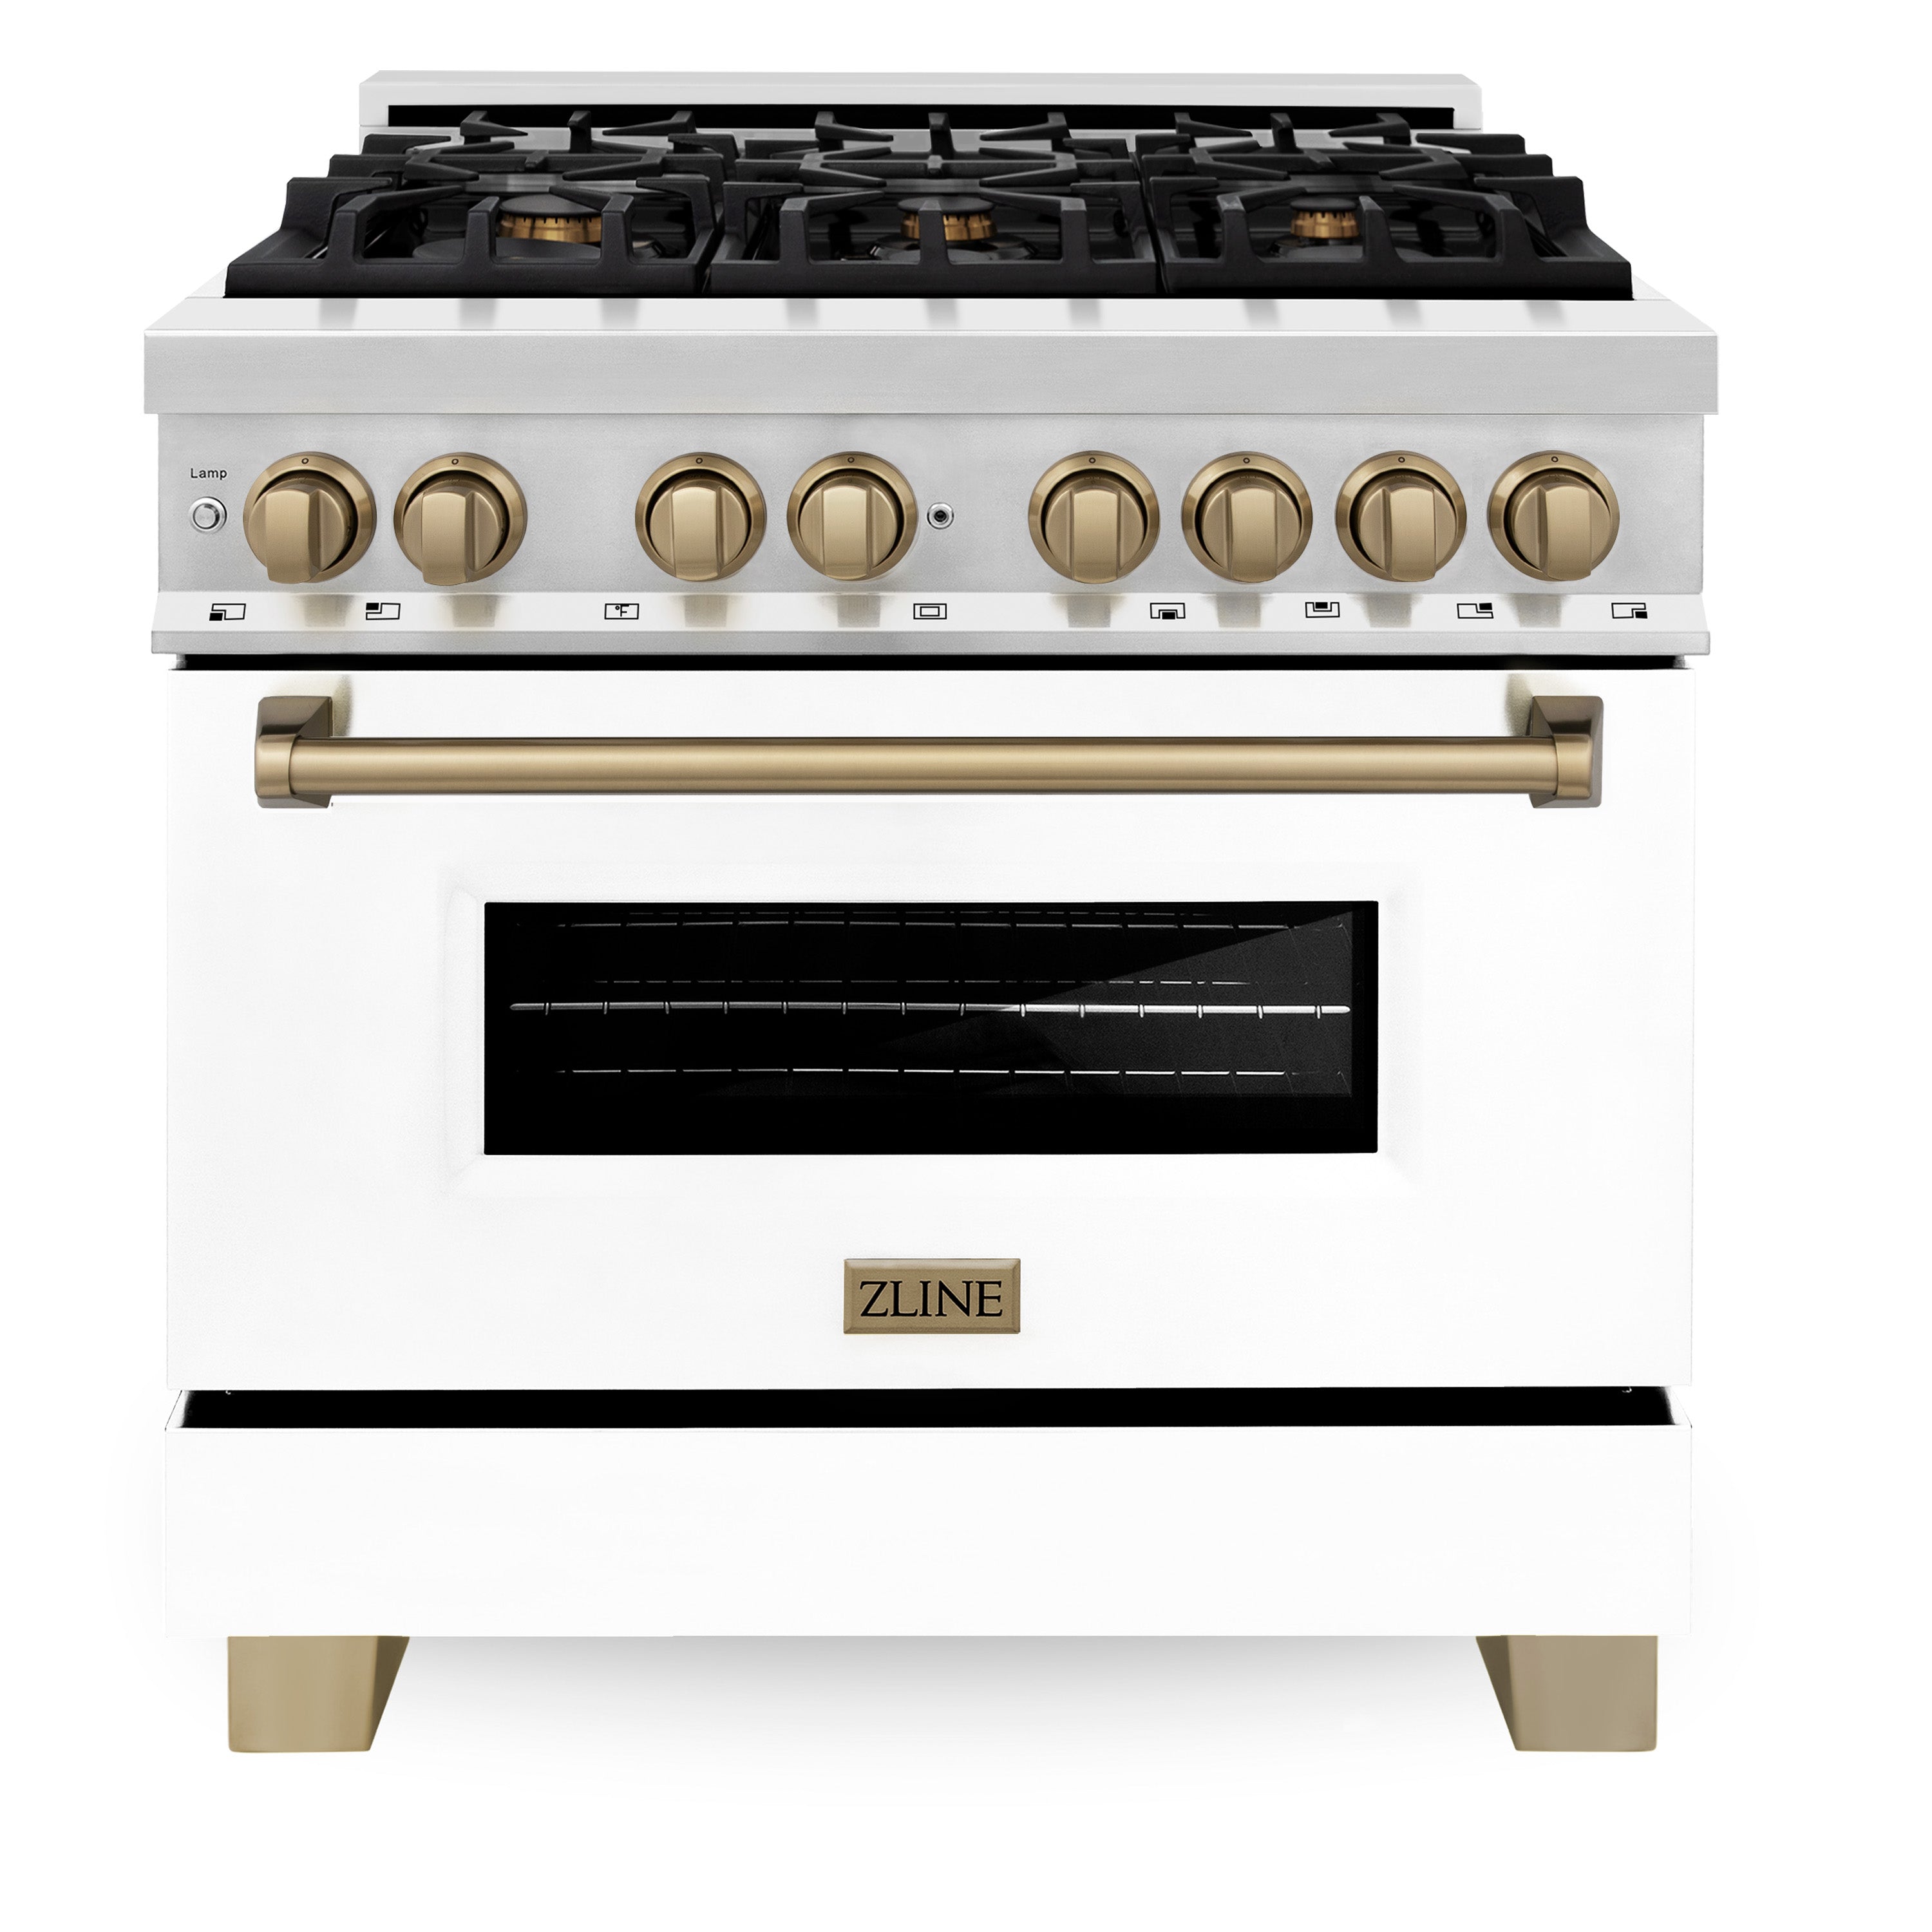 Viking stove - Appliances - Paramount, California, Facebook Marketplace